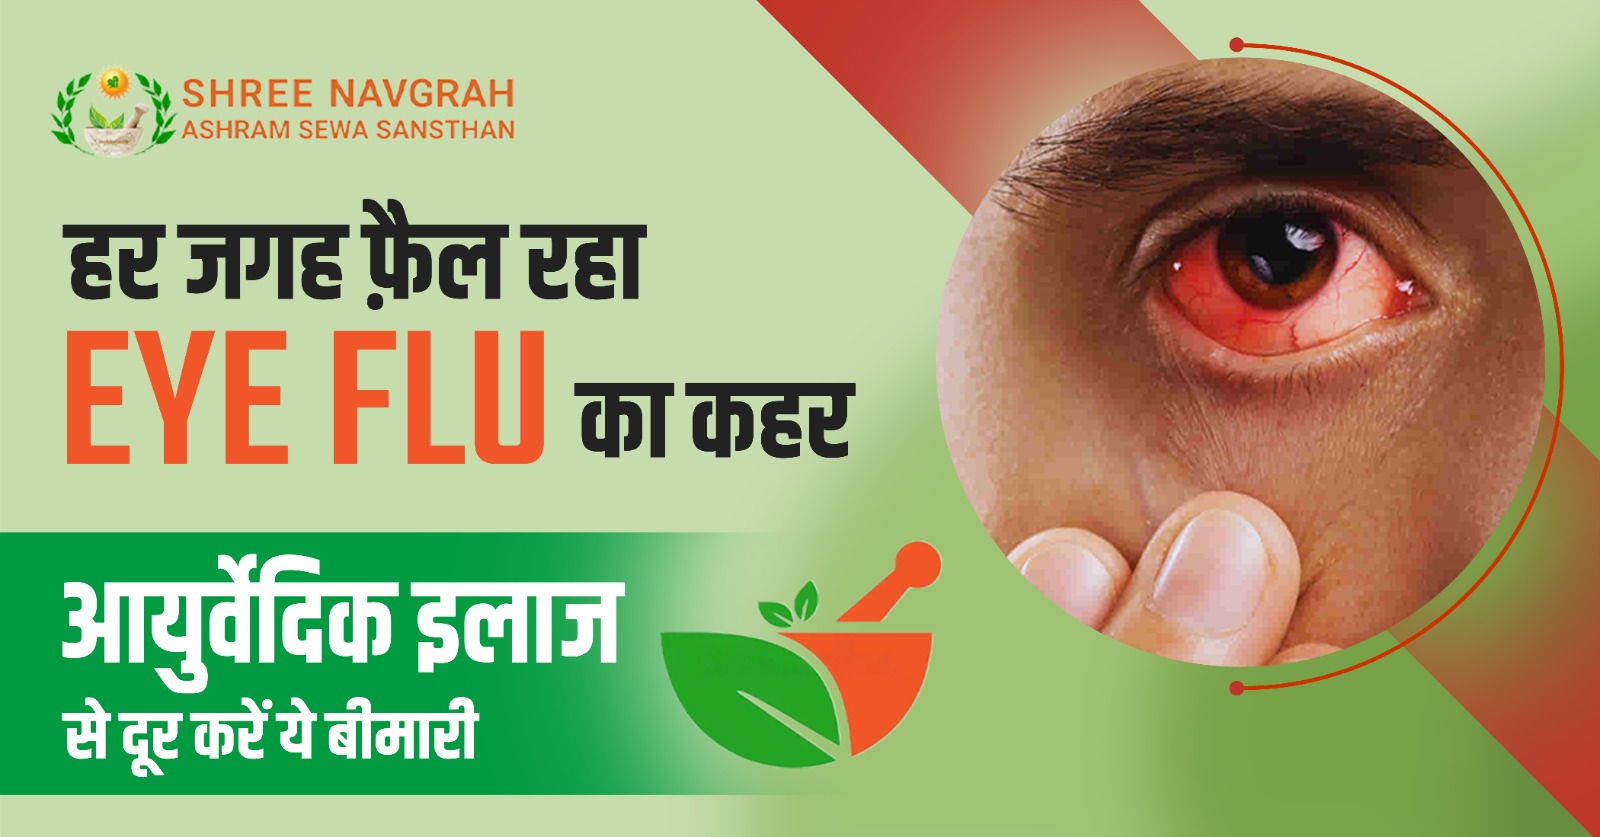 eye flu ayurvedic treatment in hindi